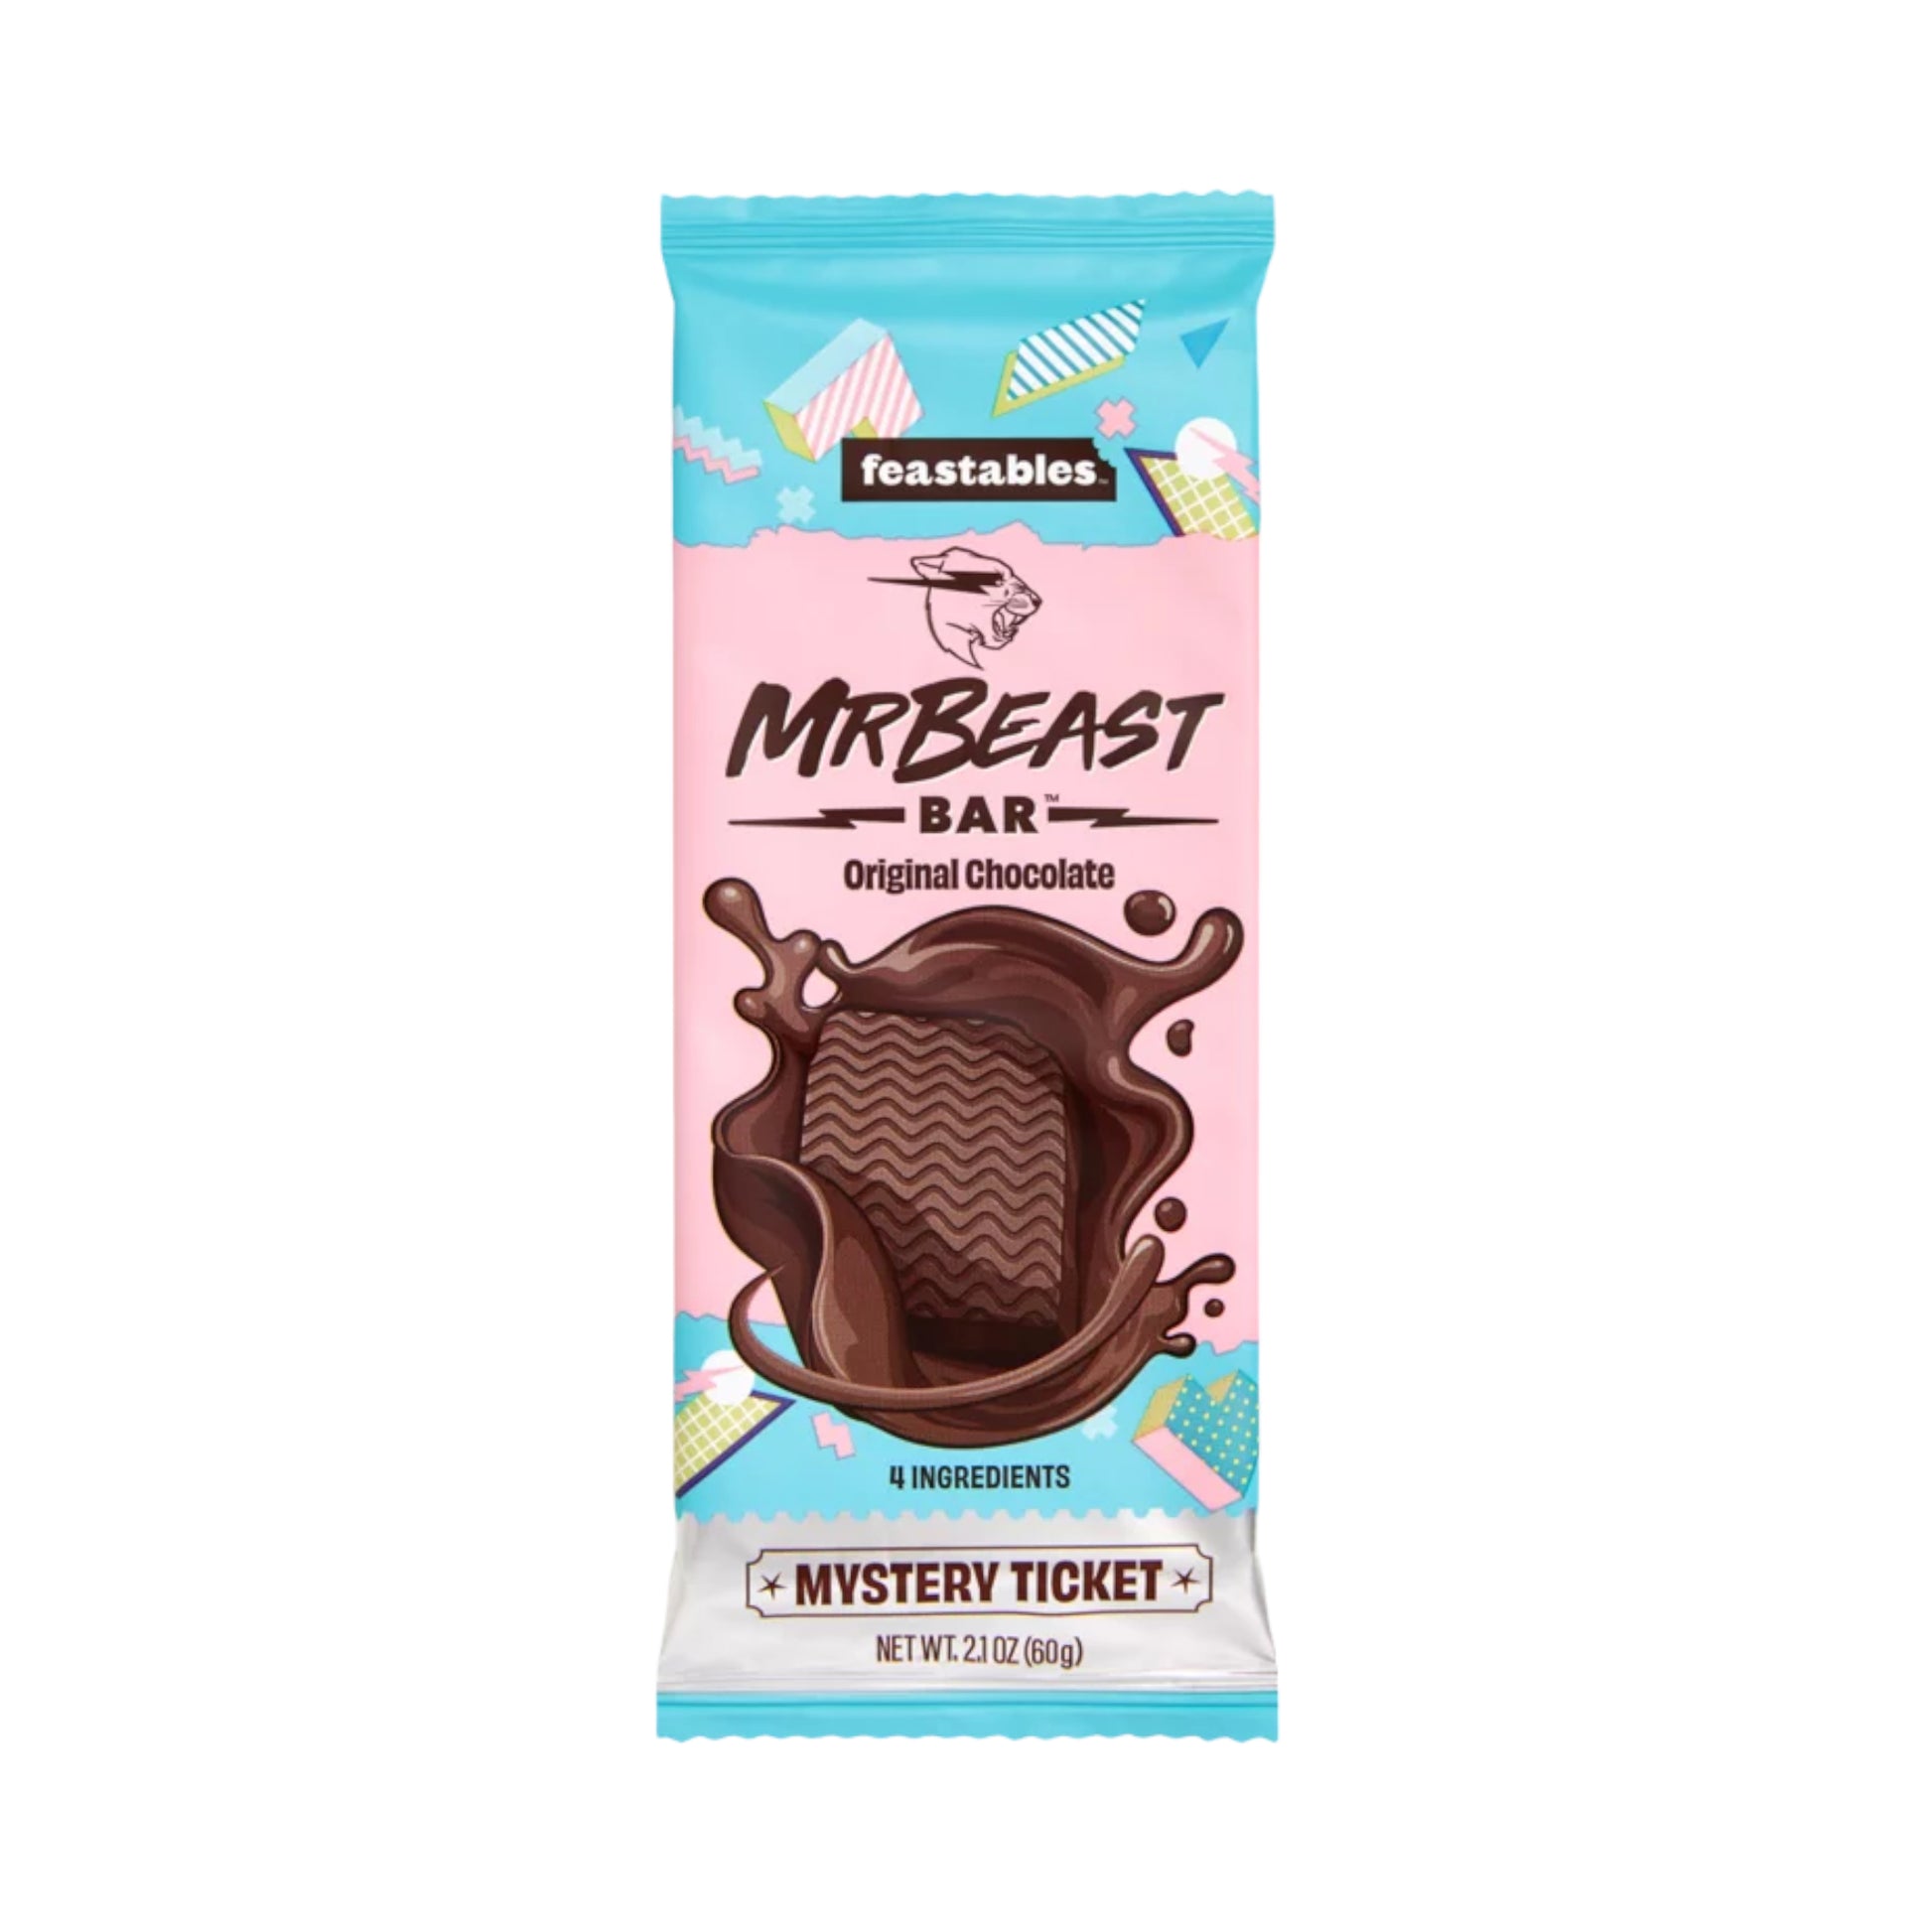 Feastables MrBeast Milk Chocolate Crunch Bar, 2.1 oz (60g), 1 Bar